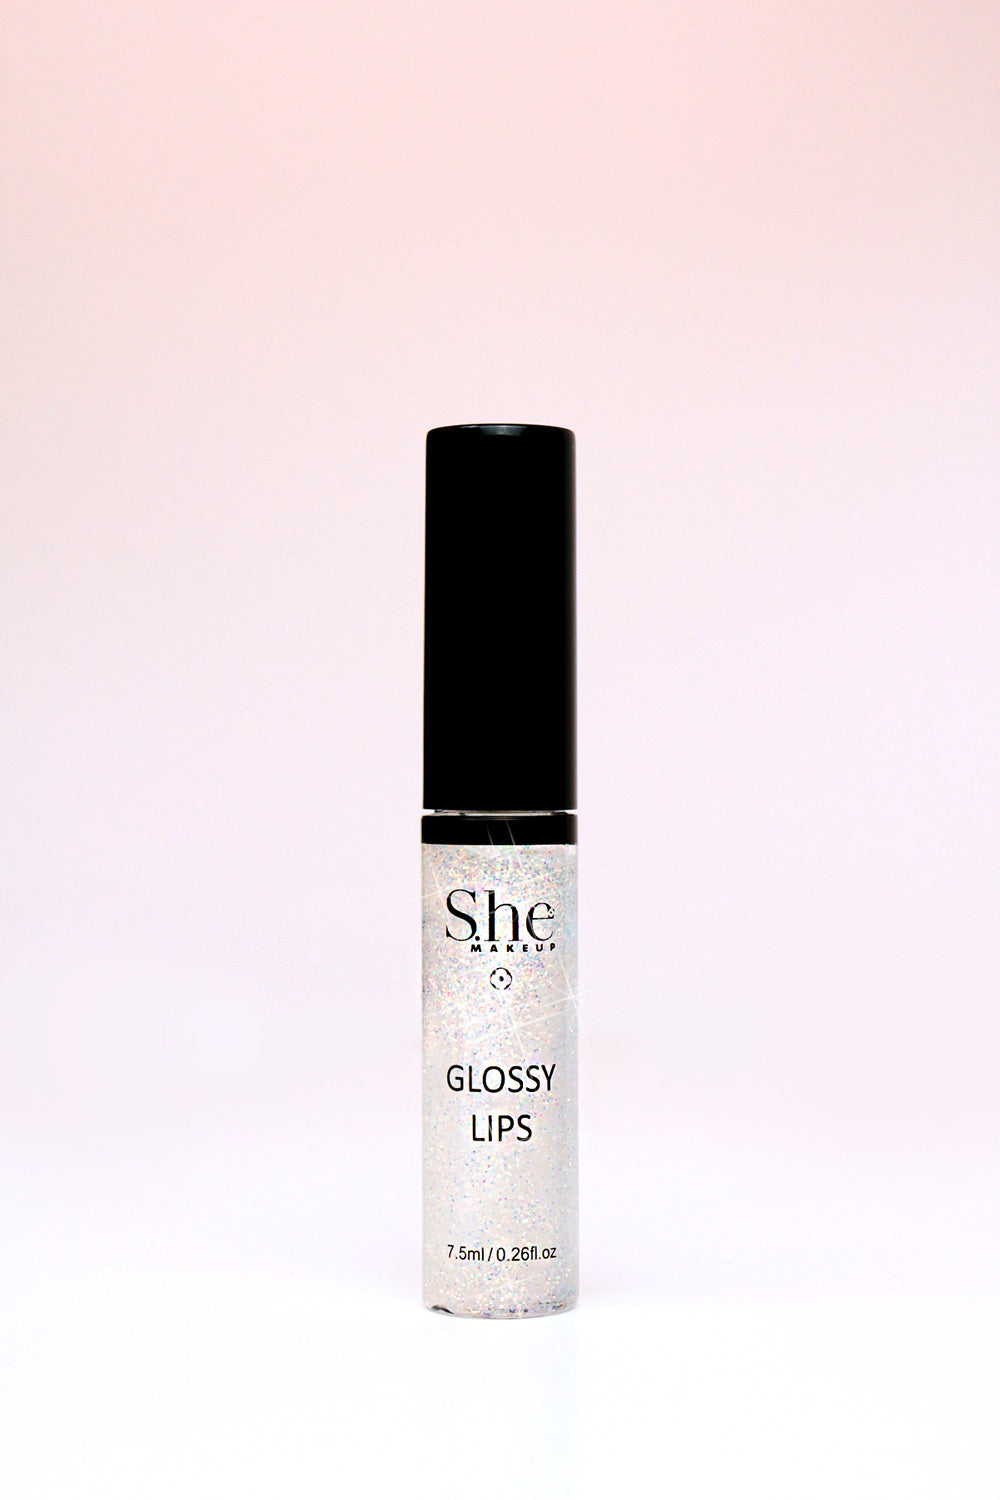 S.he Glossy Lips Lip Gloss